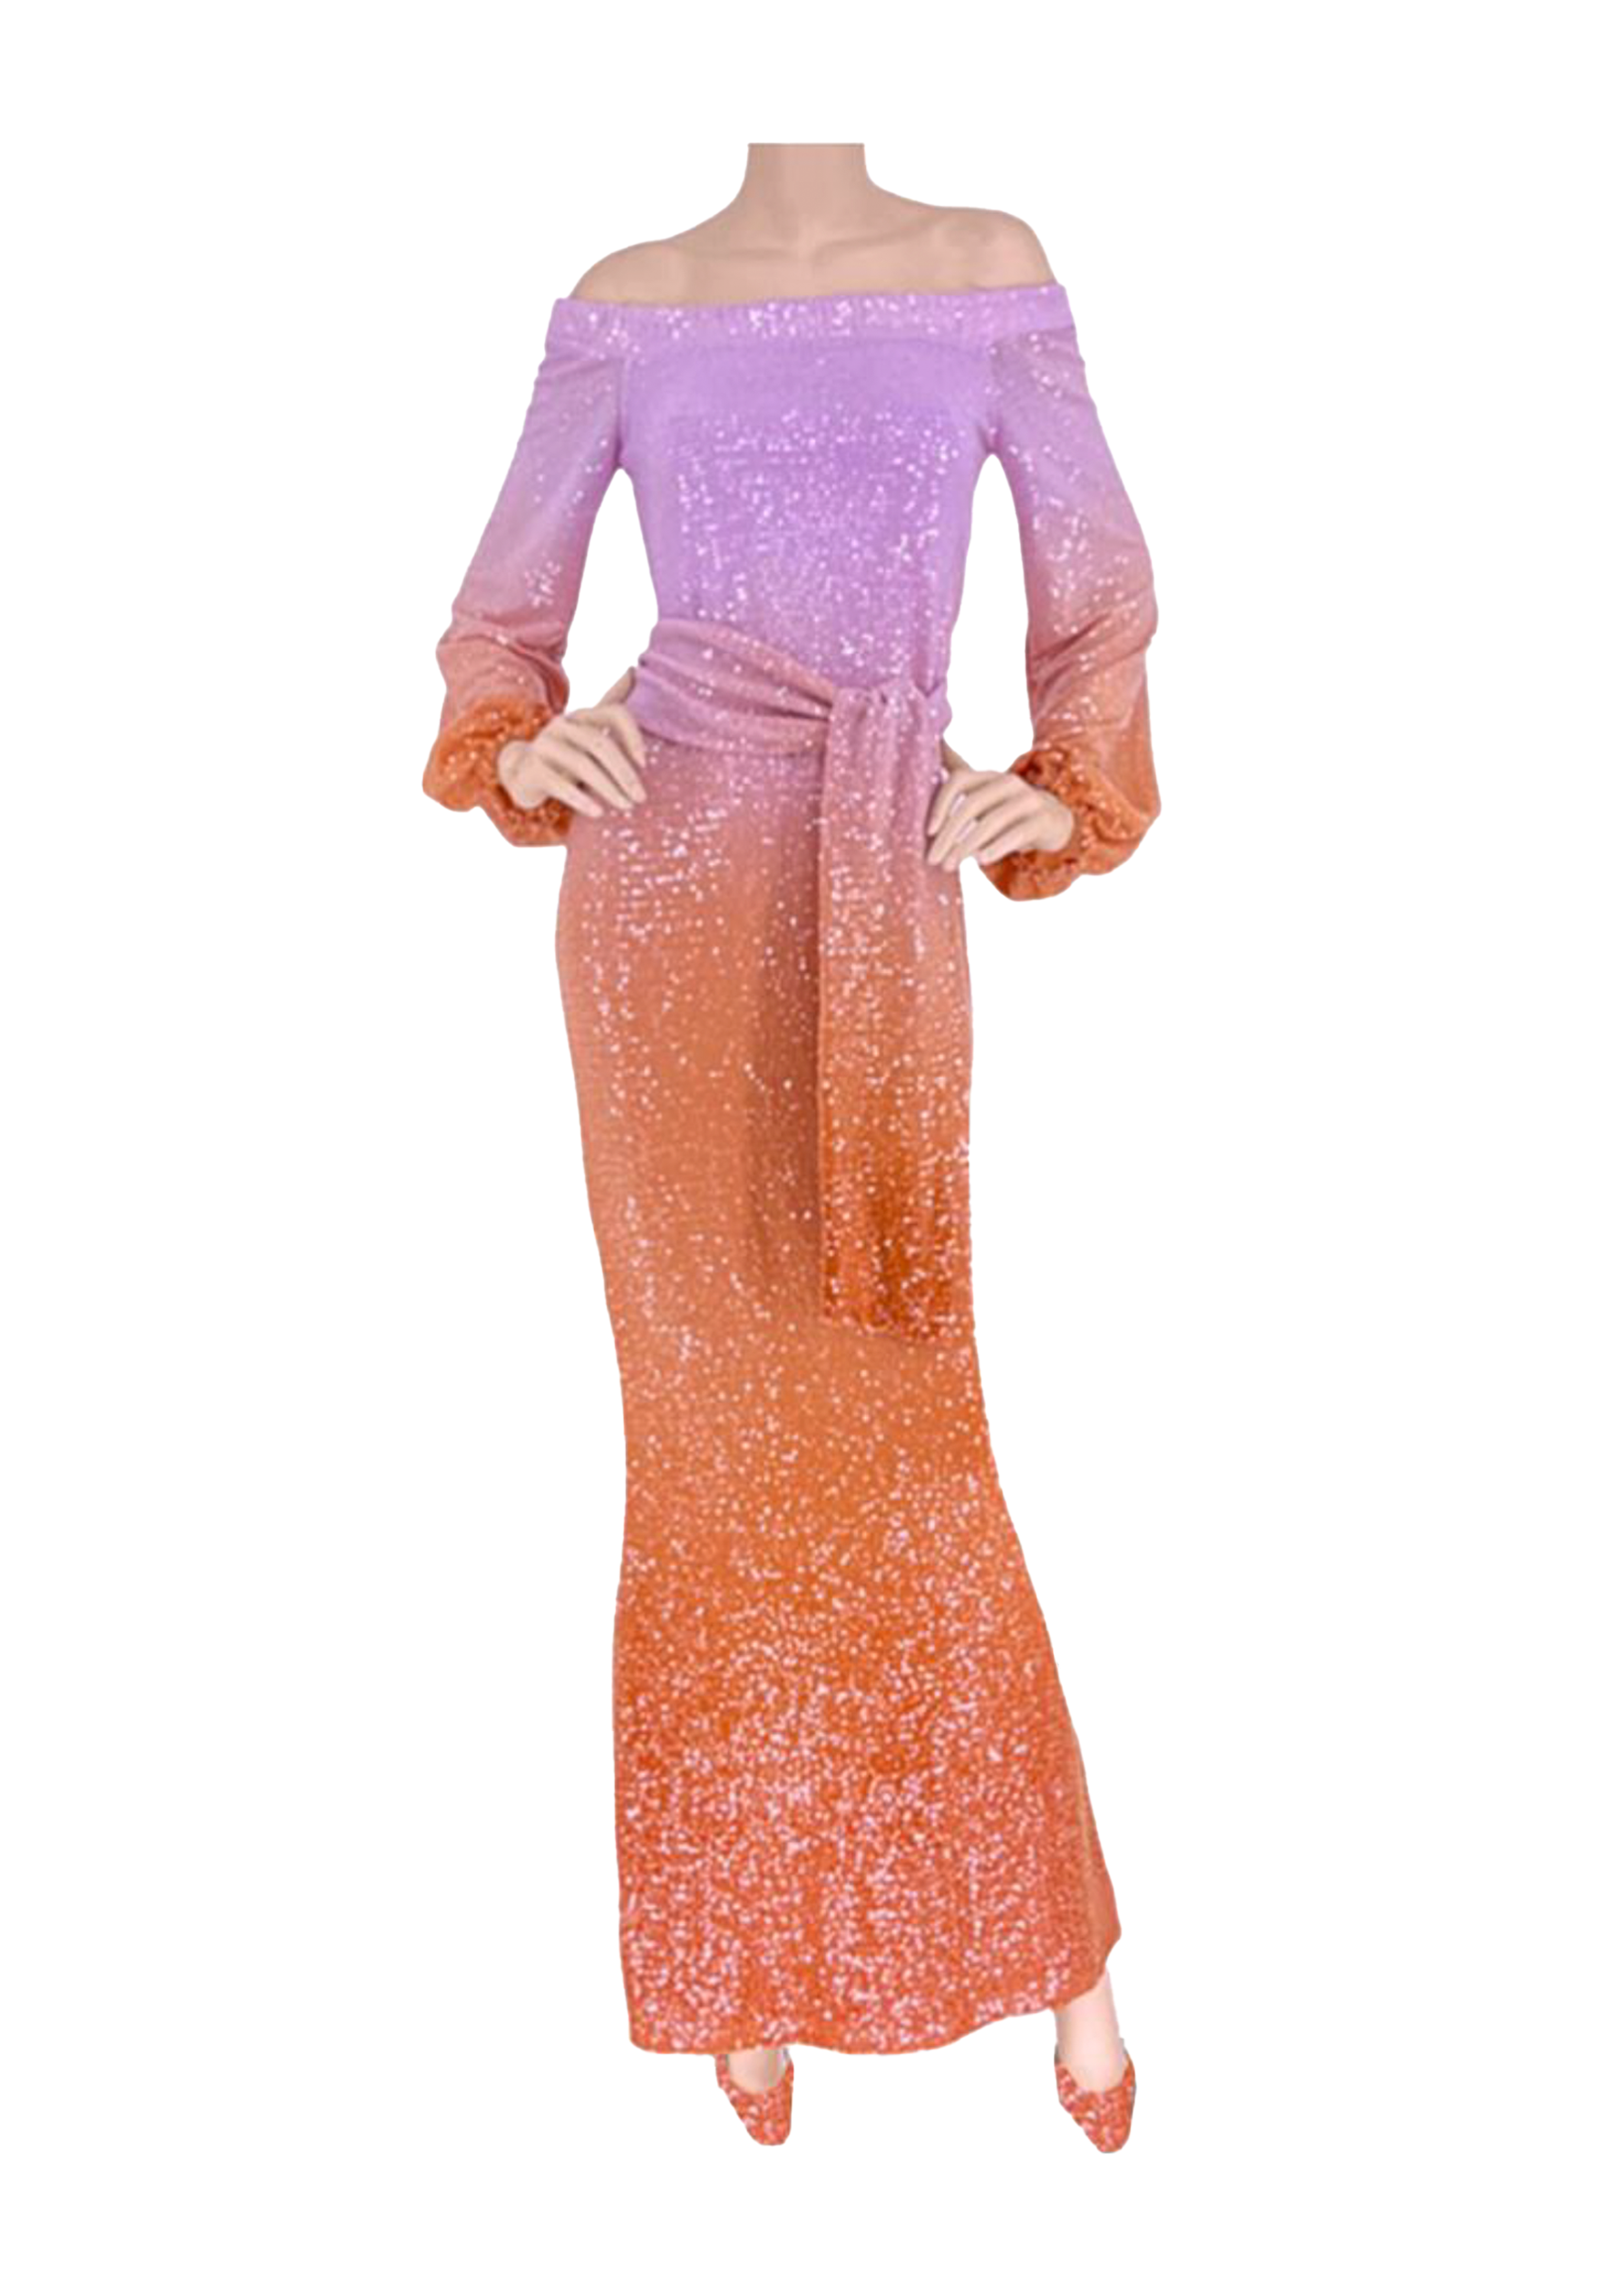 Orchid/Copper Ombre Liquid Sequin Dress LSD4OM - Sara Mique Evening Wear